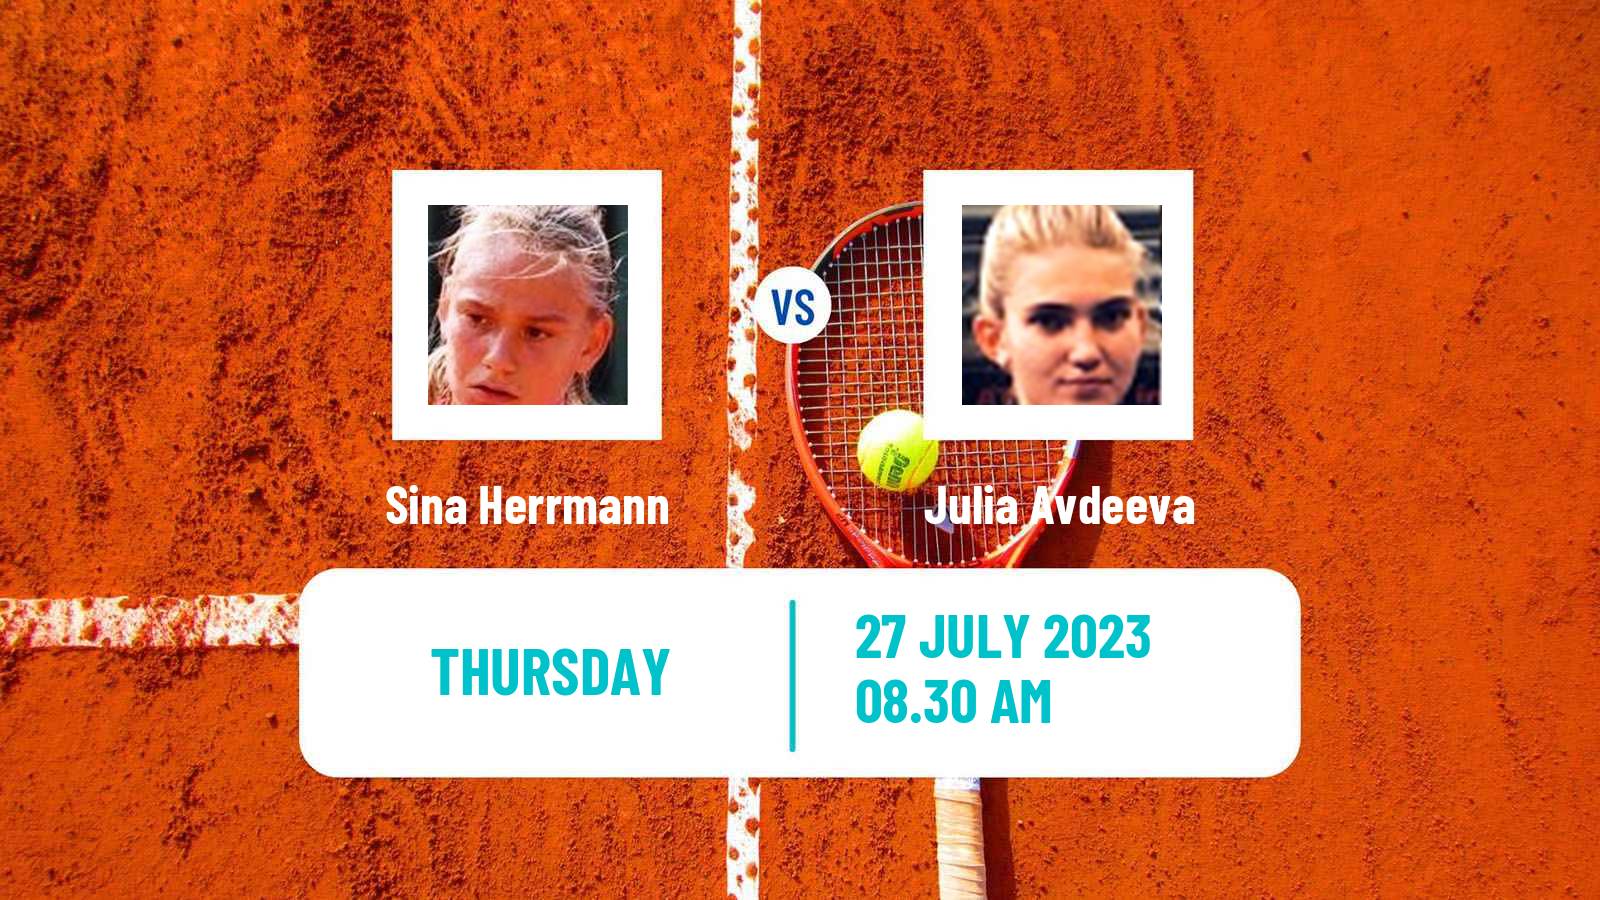 Tennis ITF W25 Horb Women Sina Herrmann - Julia Avdeeva